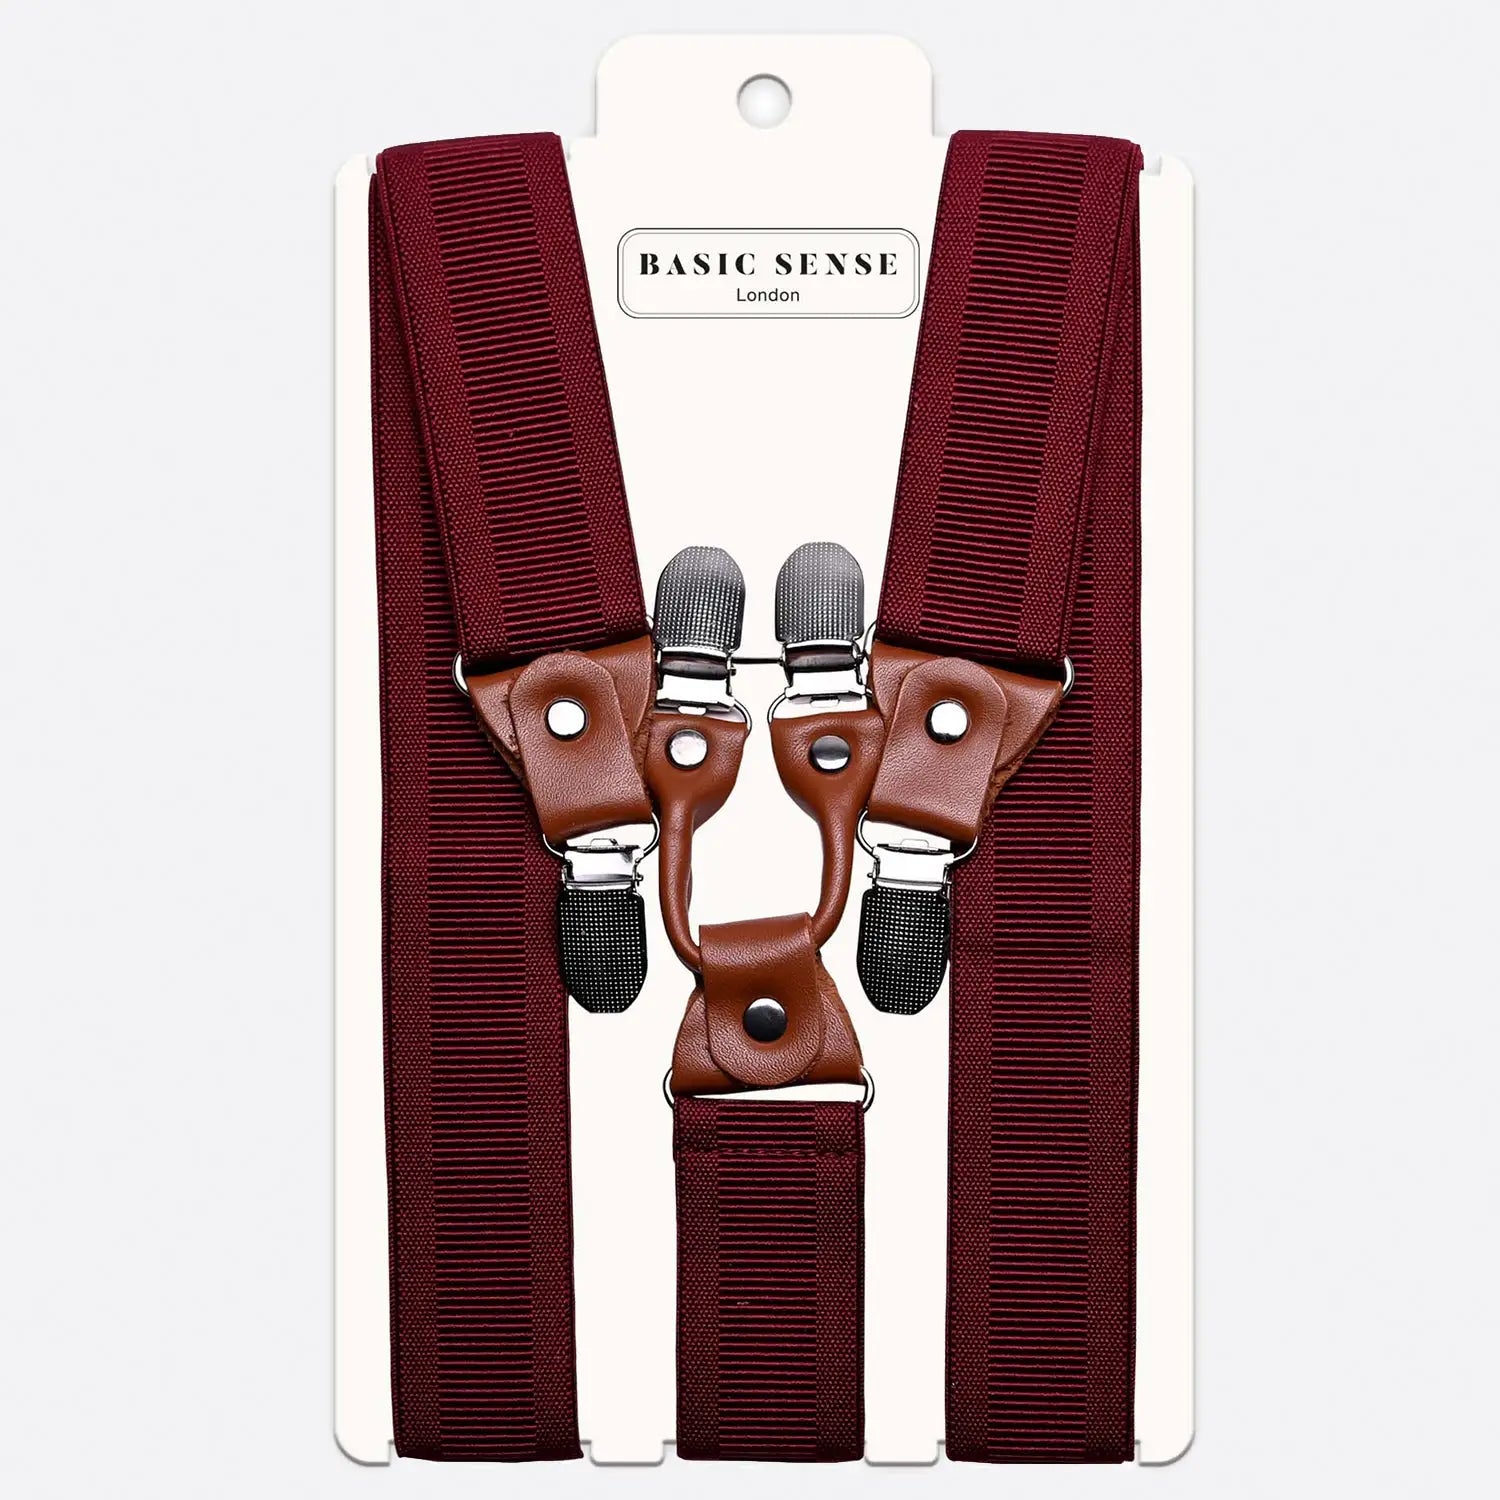 Mens burgundy suspenders made from premium fabric